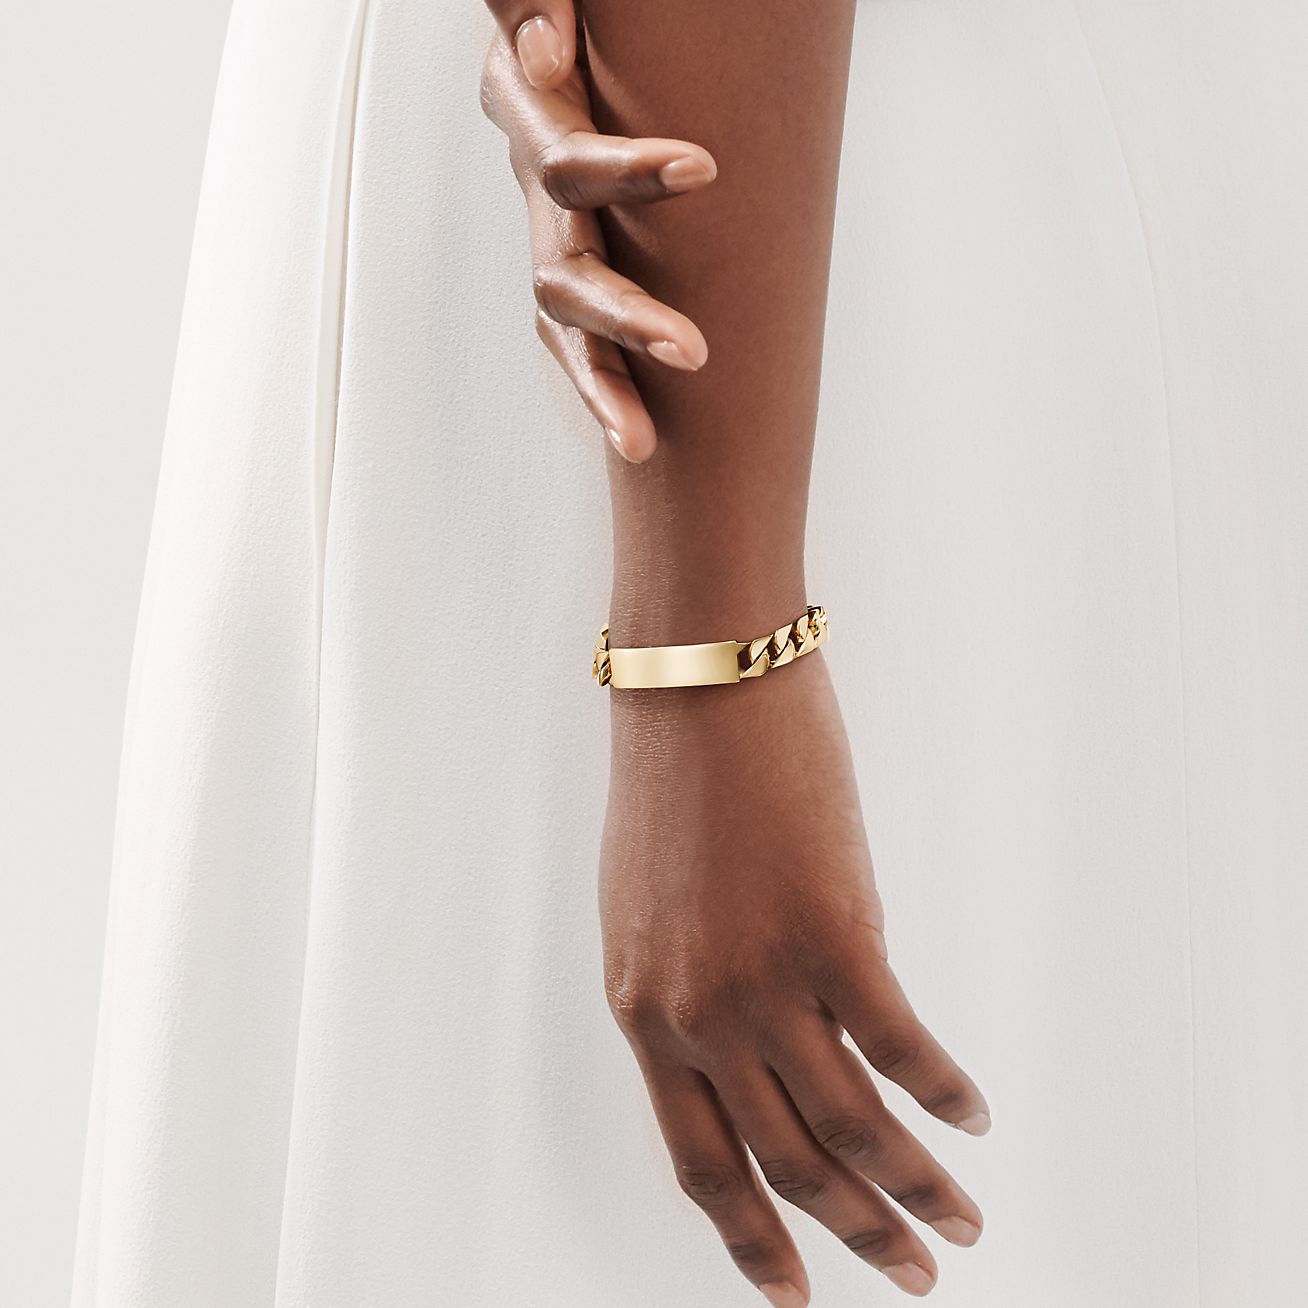 Buy Yellow gold Bracelets & Kadas for Men by Whp Jewellers Online | Ajio.com